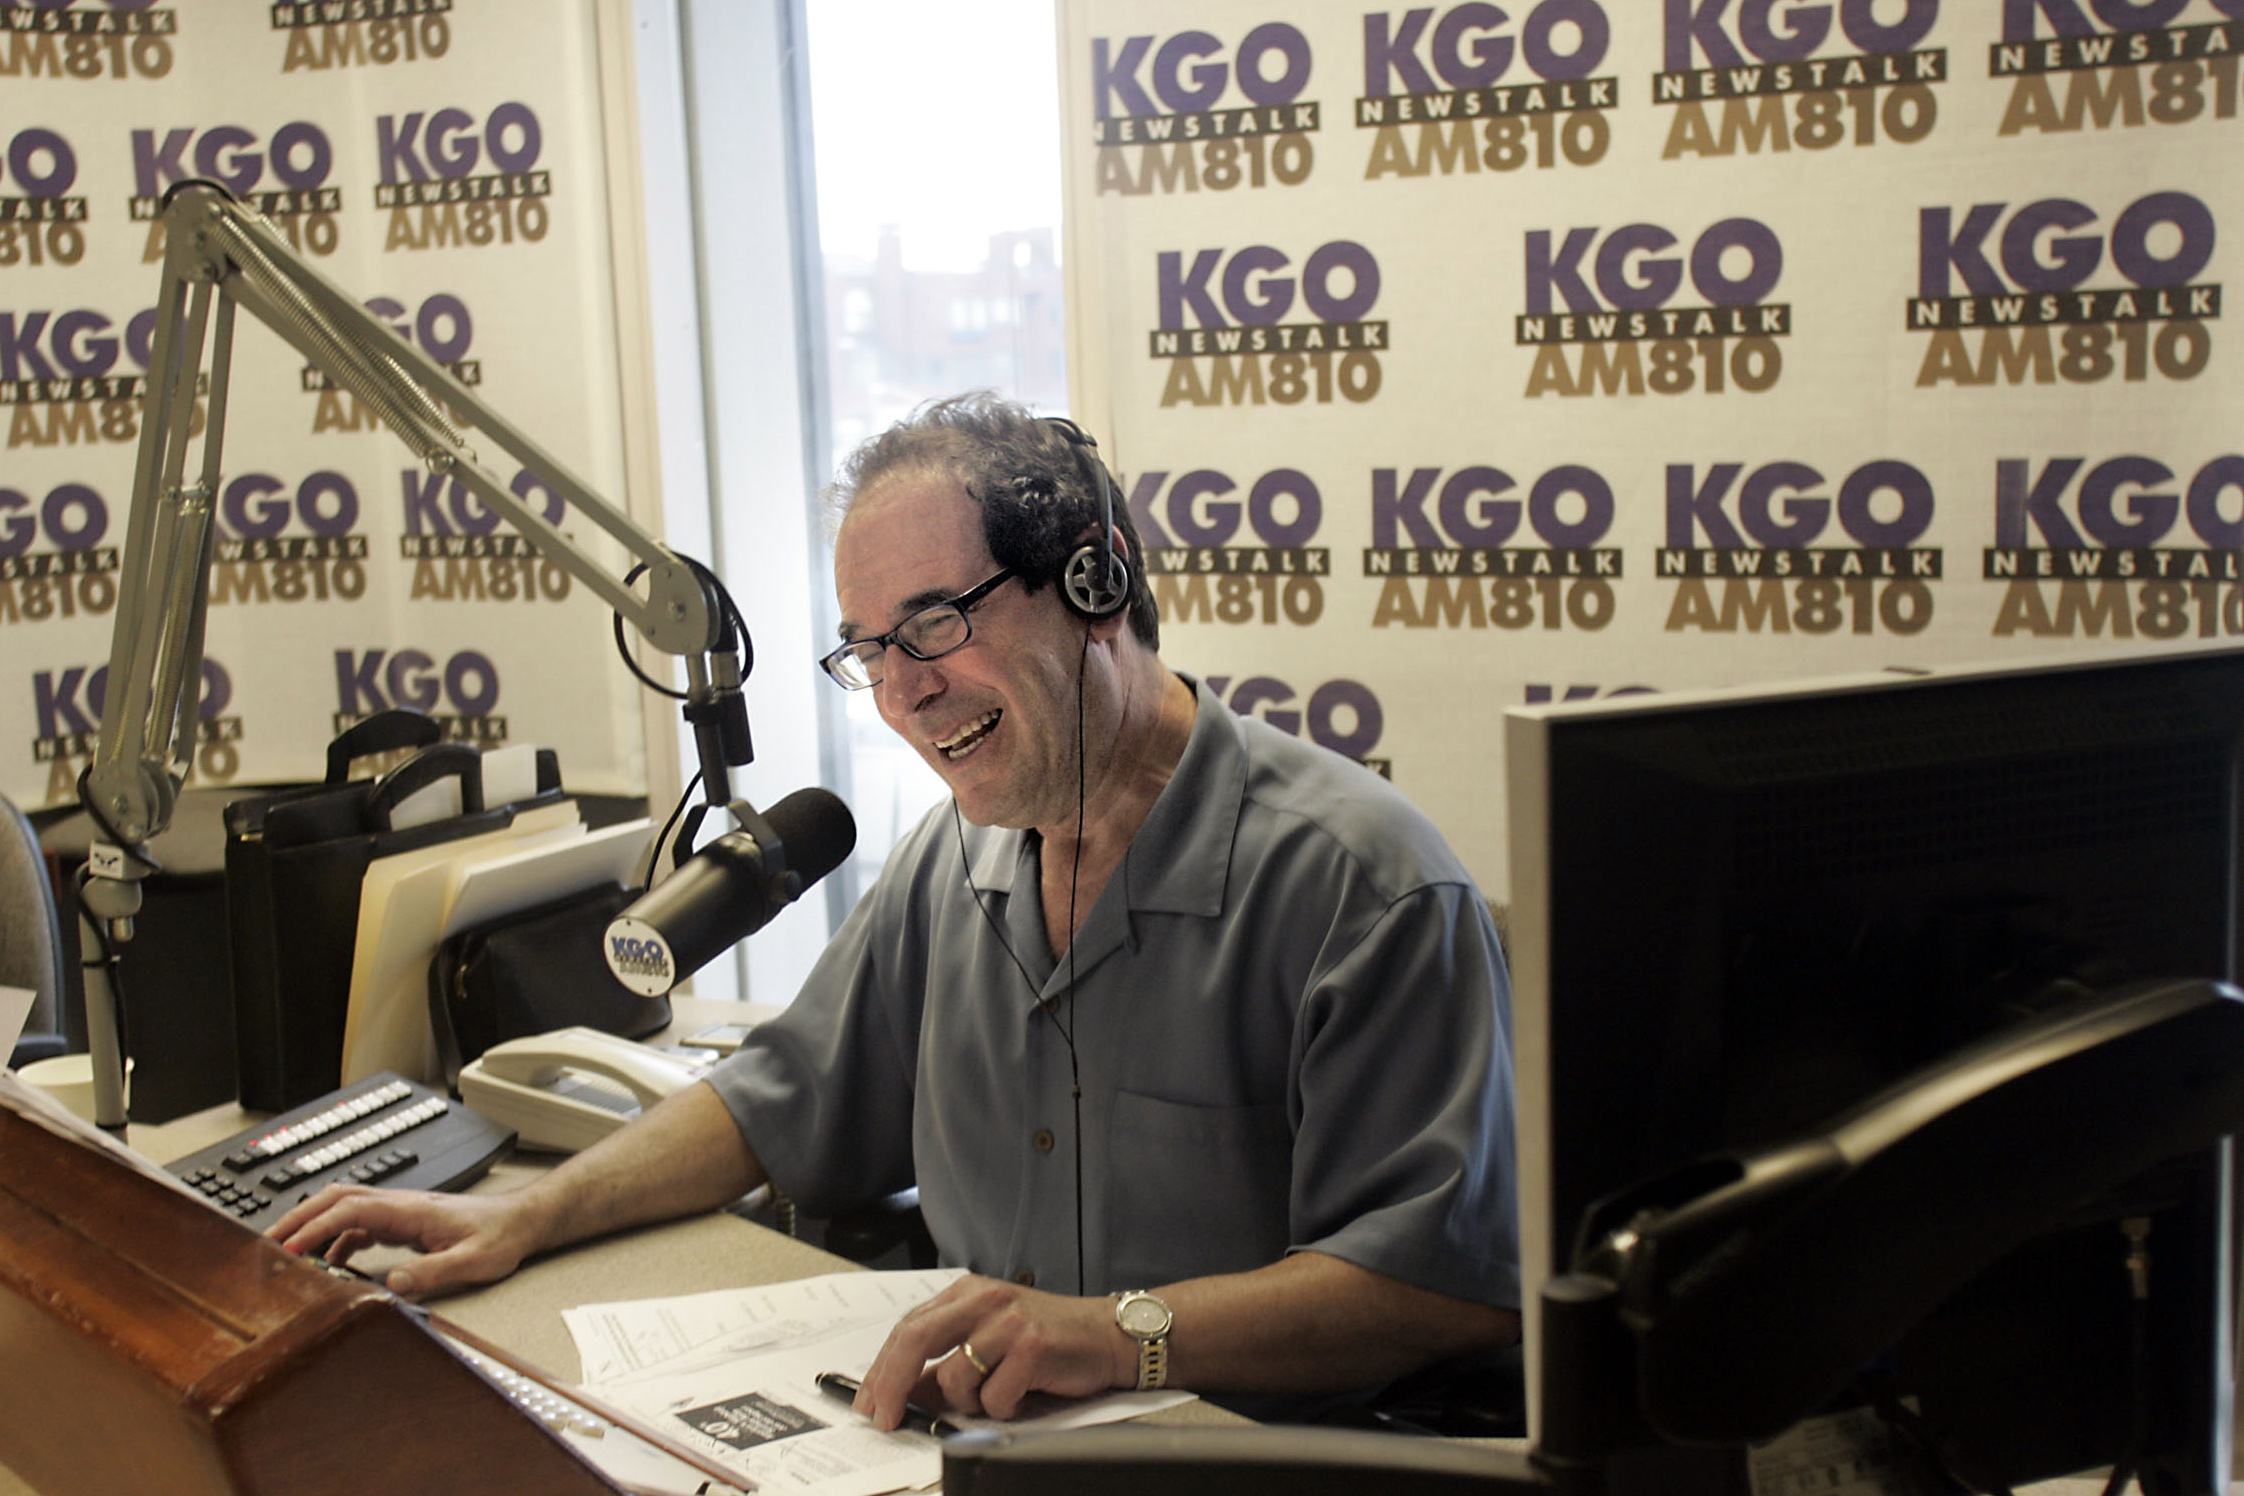 KGO Changes Formats: Long-Running AM News Talk Radio Station Promises New Programming Monday